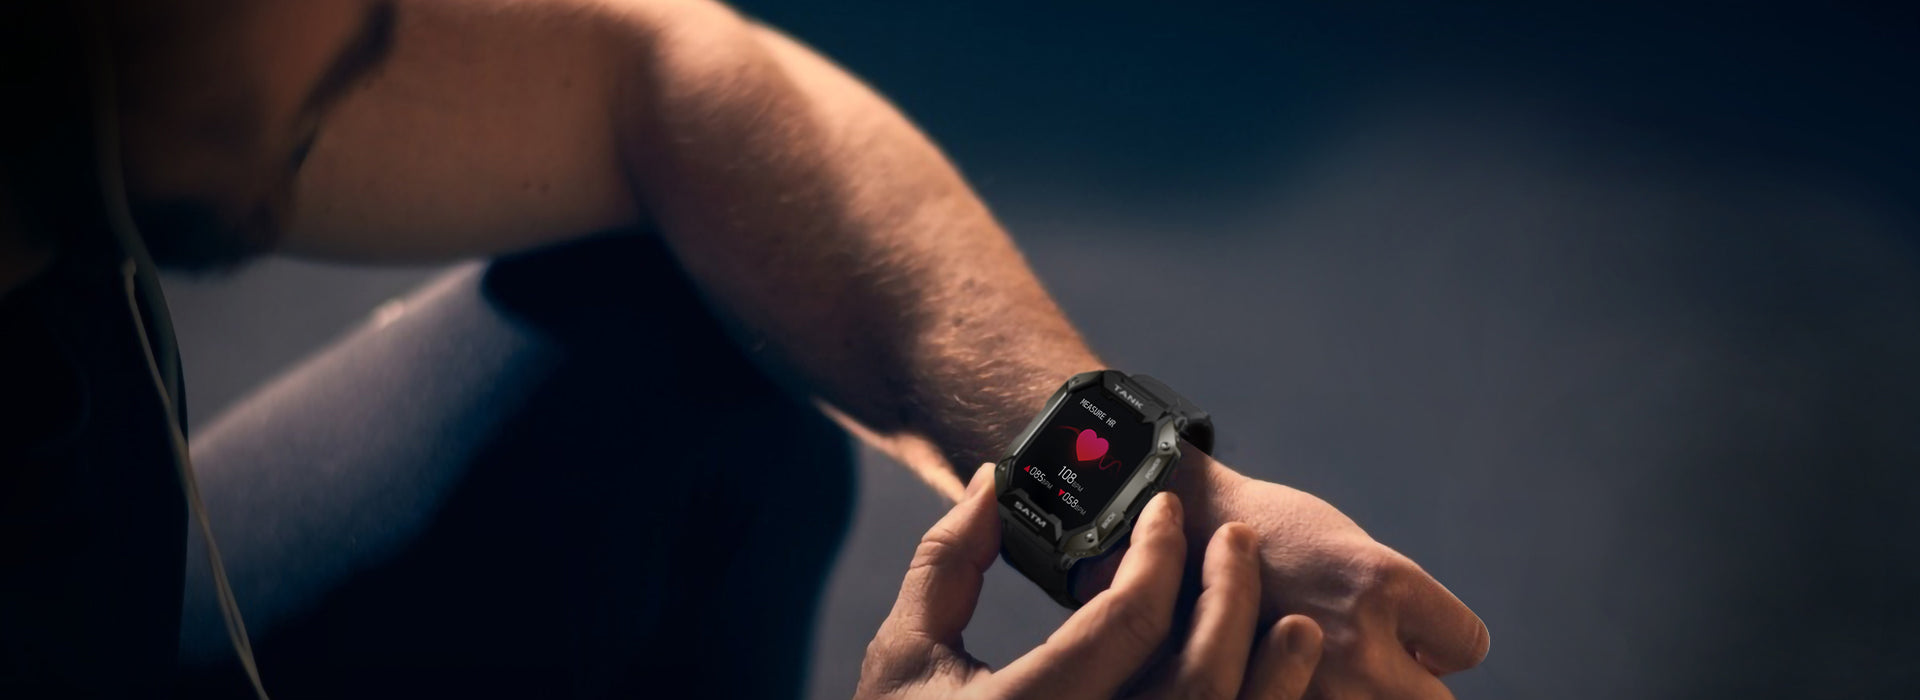 KOSPET TANK M1 Rugged Smartwatch support Health monitor